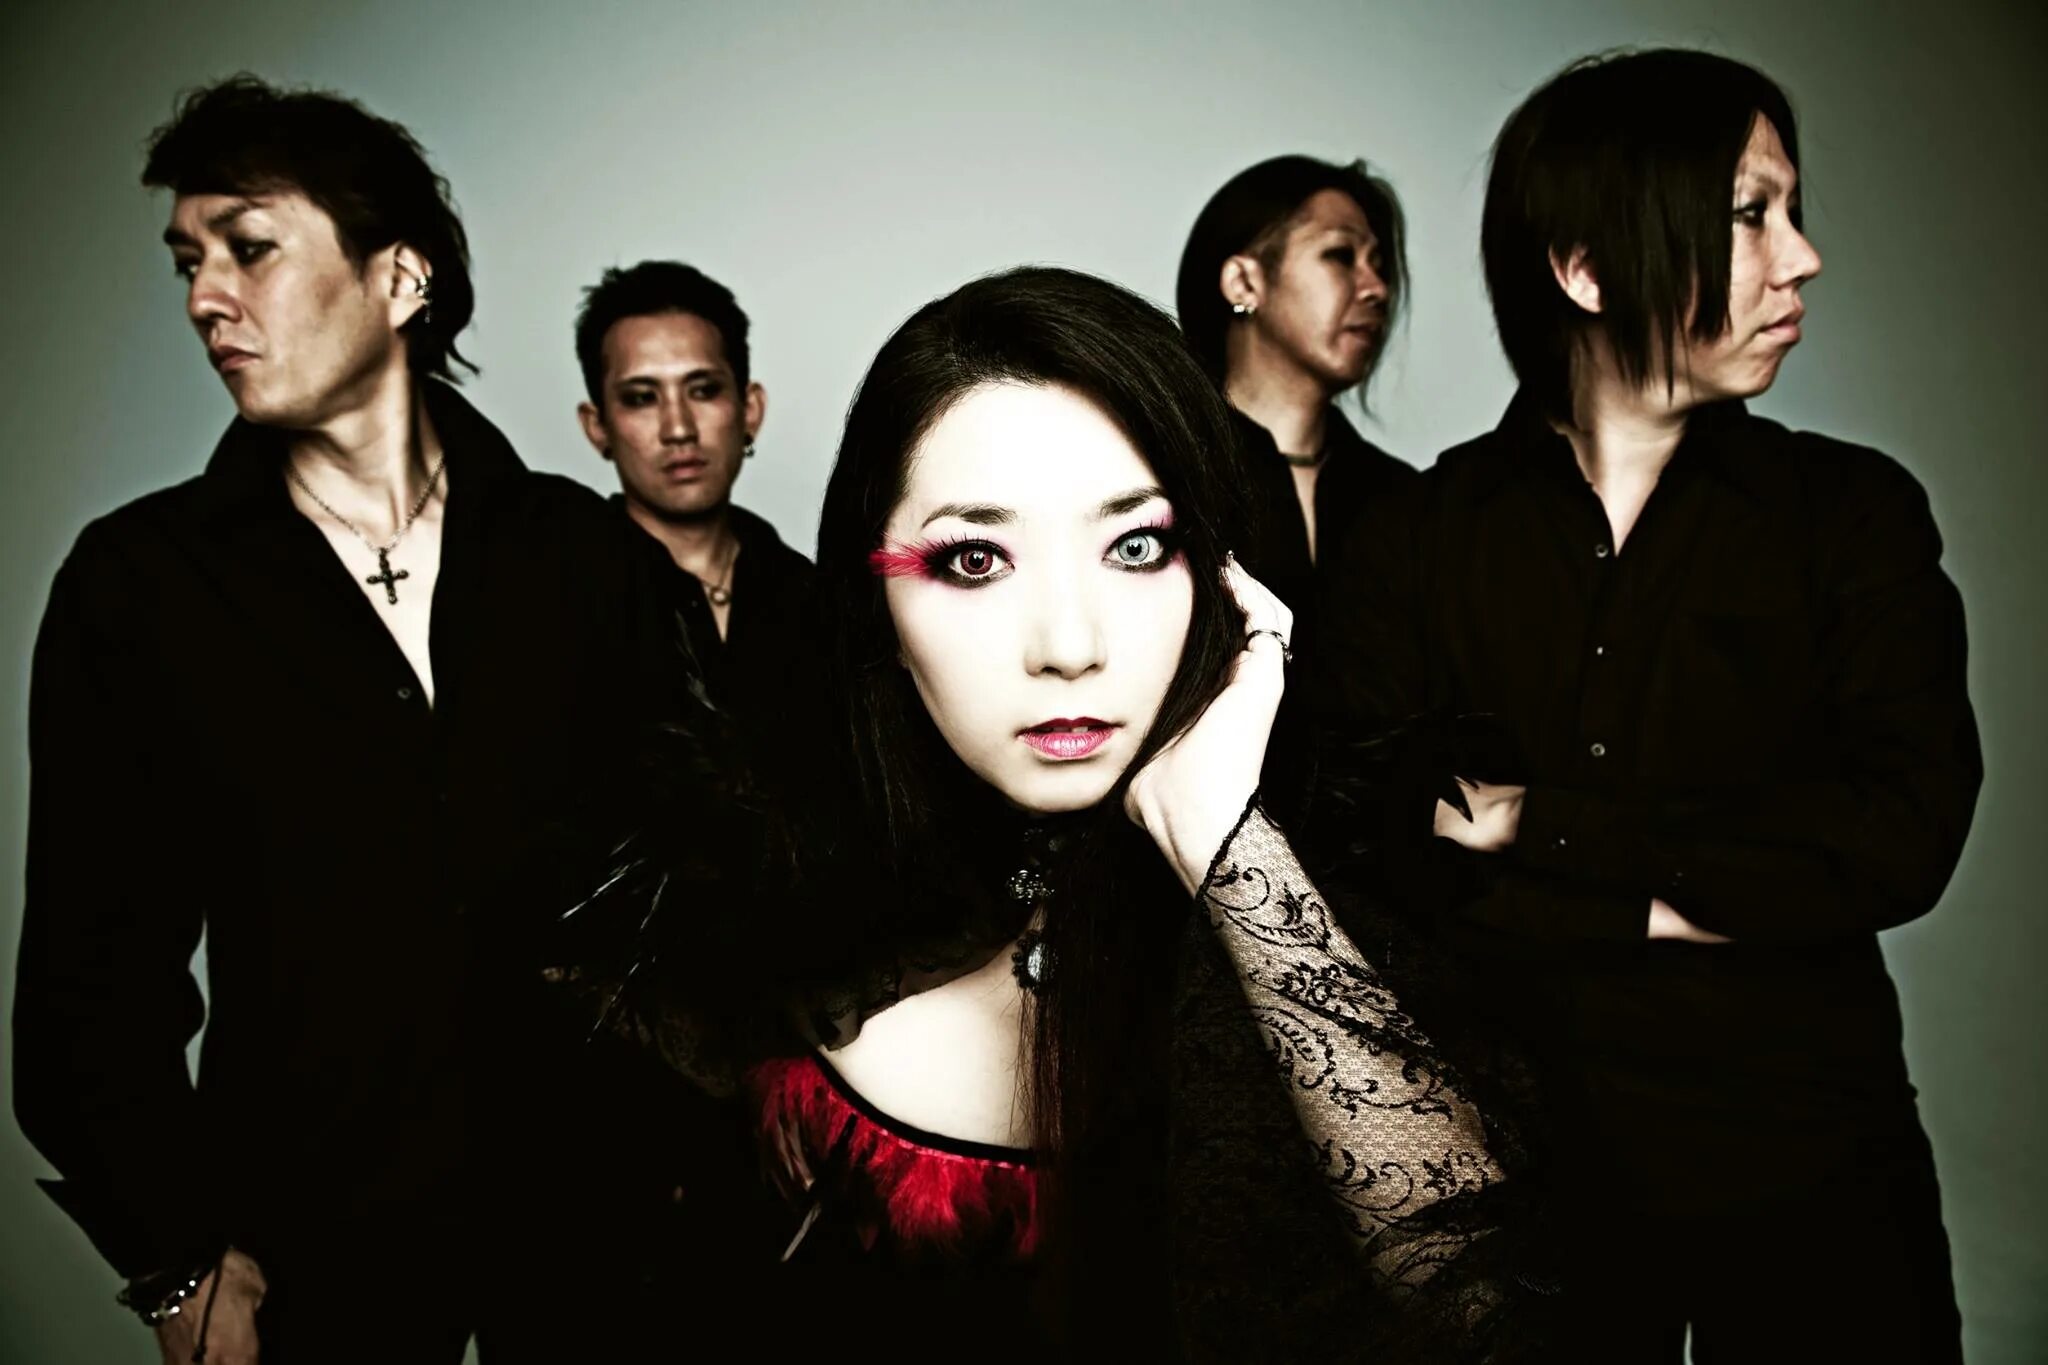 Группа куда. Японский металл с женским вокалом. Born группа Япония. Металл группы Японии. Японские метал группы.